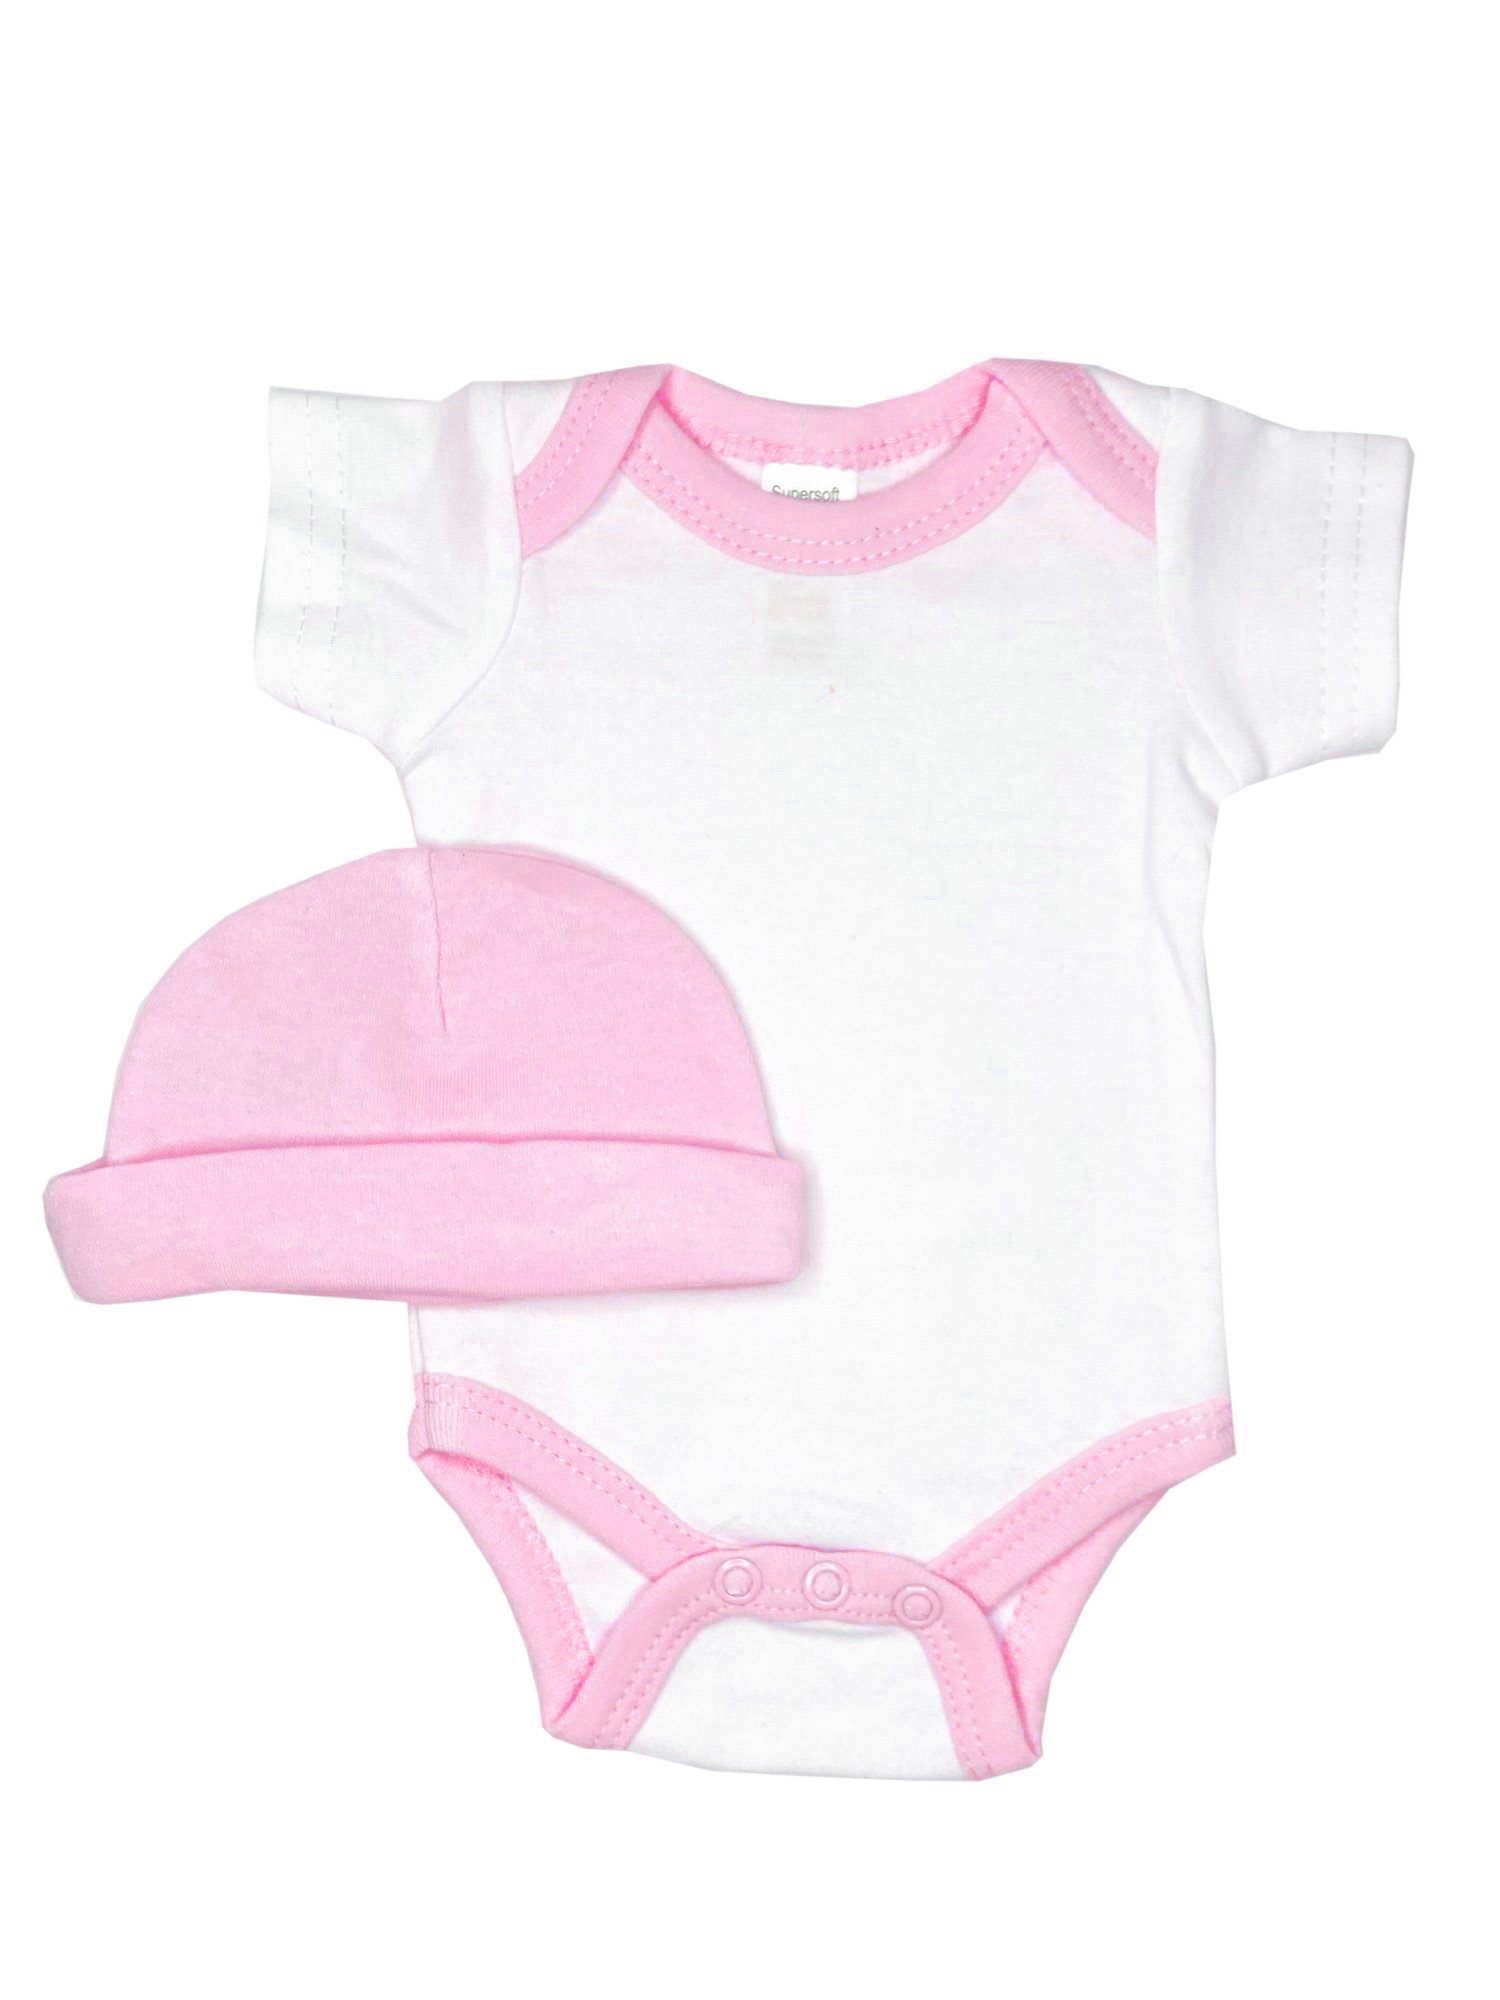 Classic Pink & White 4 piece set - Vest, Top, Trousers & Hat Set Soft Touch 